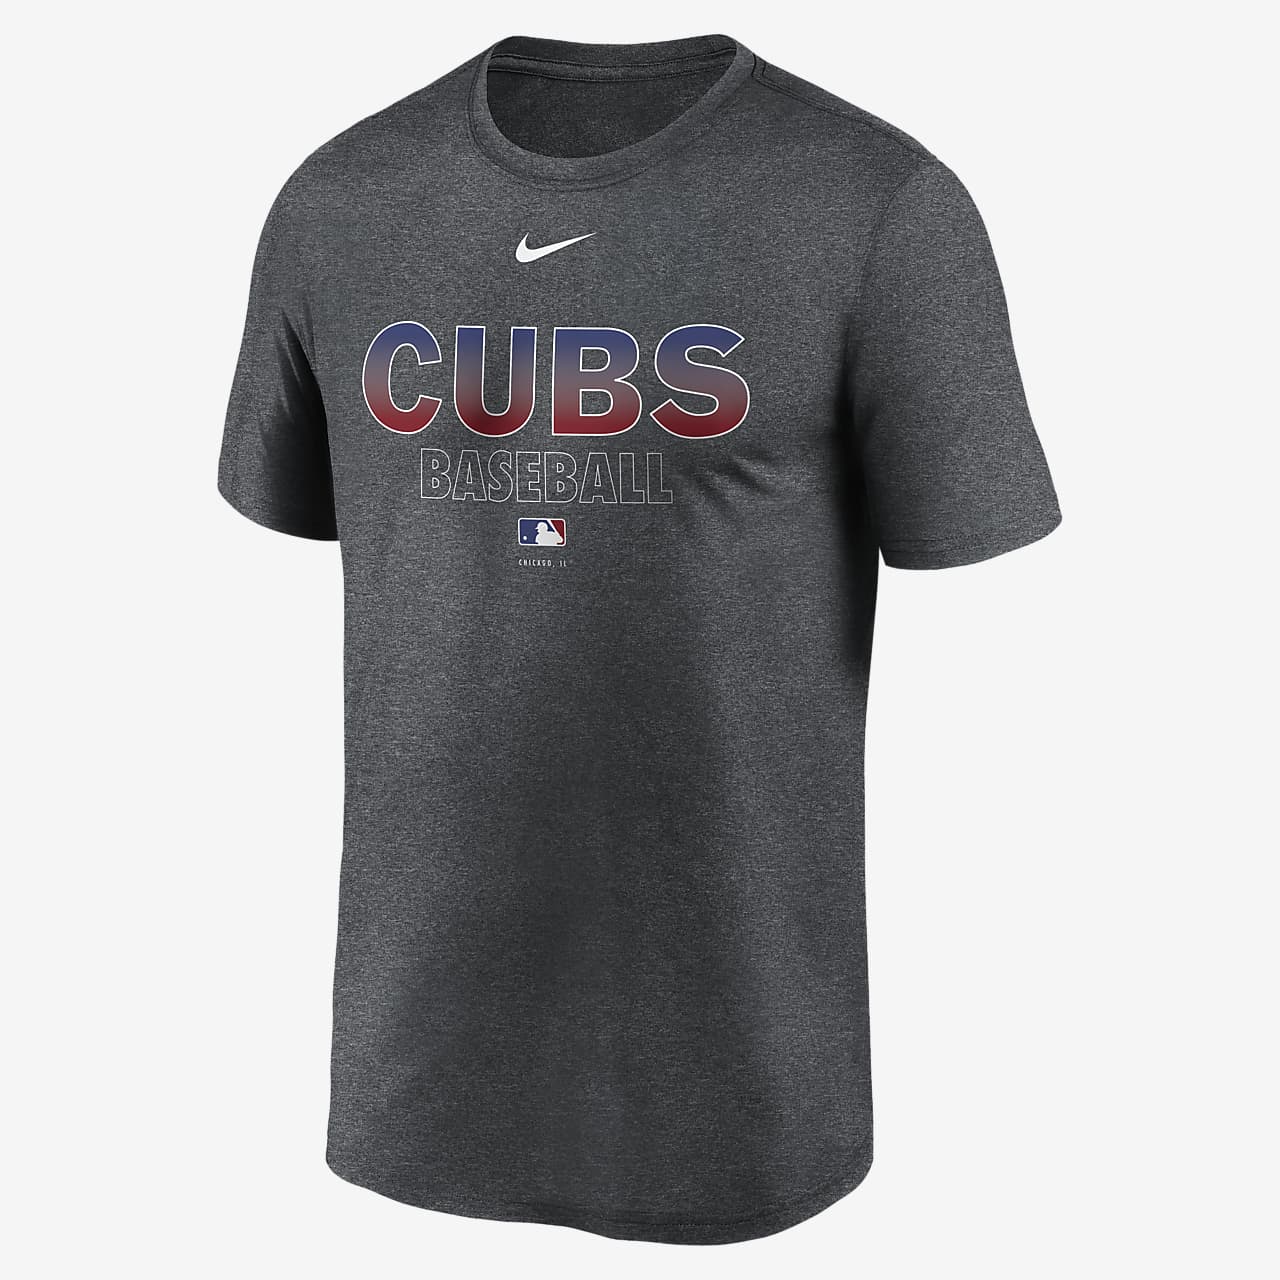 chicago cubs dri fit shirt